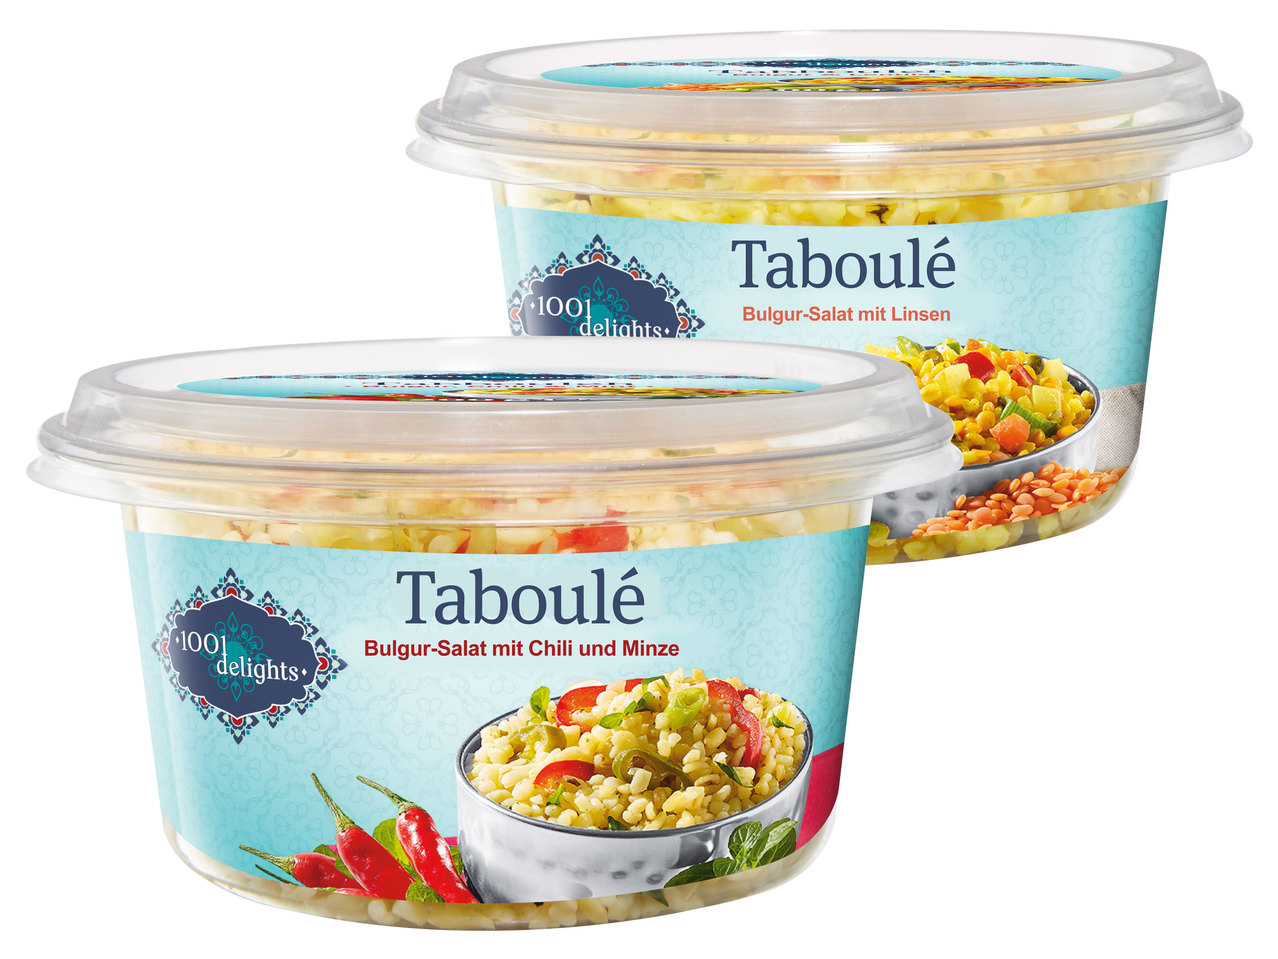 1001 DELIGHTS Taboulé-Salat